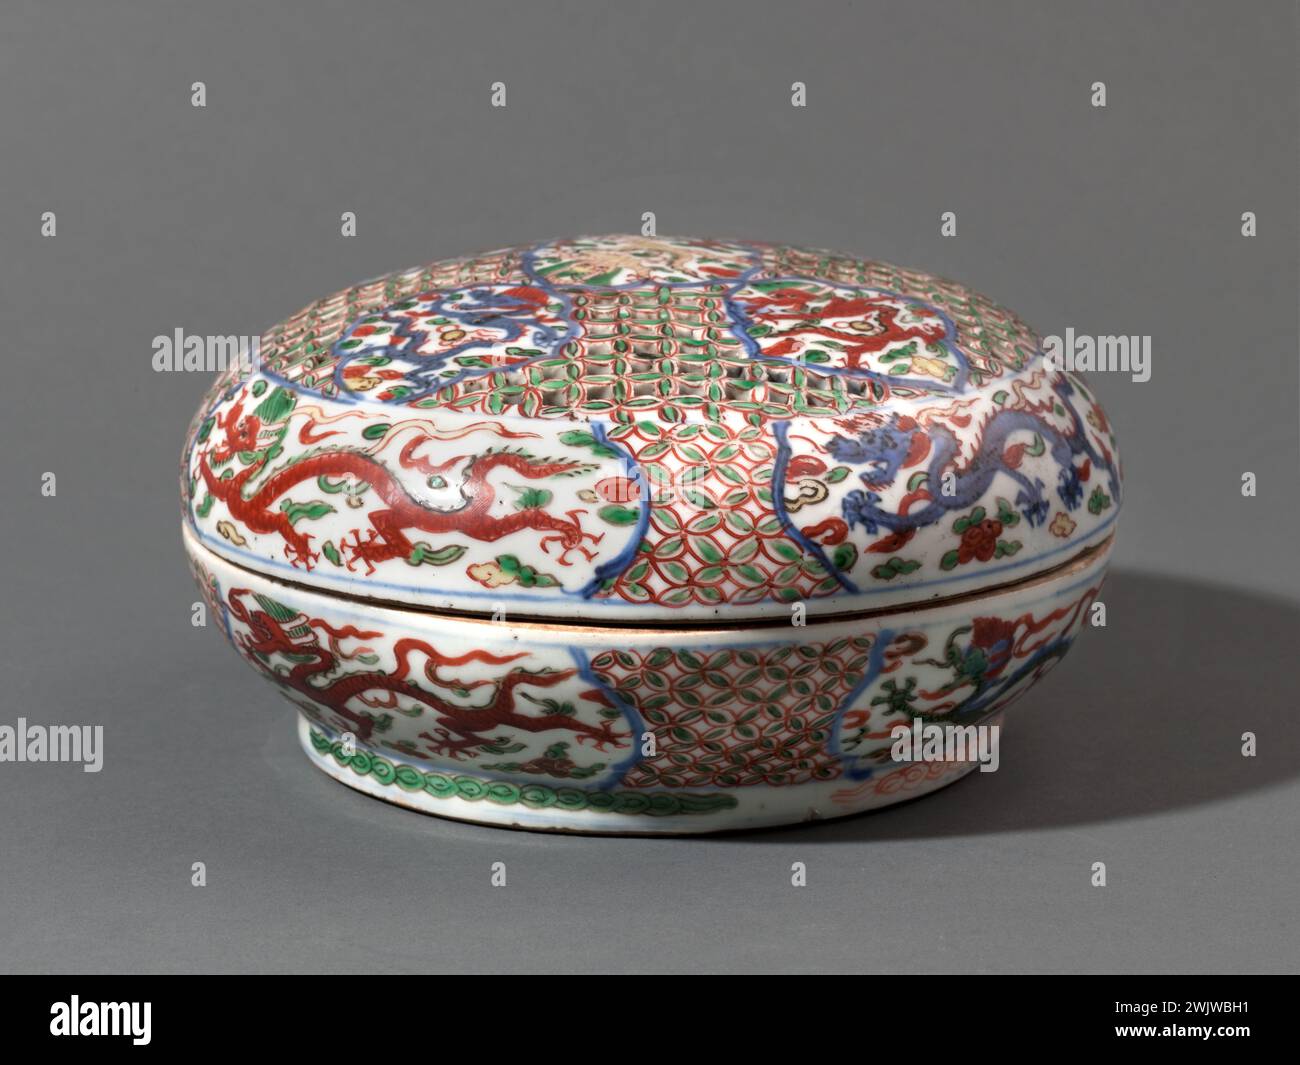 Box. Porcelain, Ming dynasty (1368-1644). Provenance: China. Paris, Cernuschi museum. 78847-12 Box, Chinese Ceramic, cover, Ming dynasty, dragon, porcelain Stock Photo